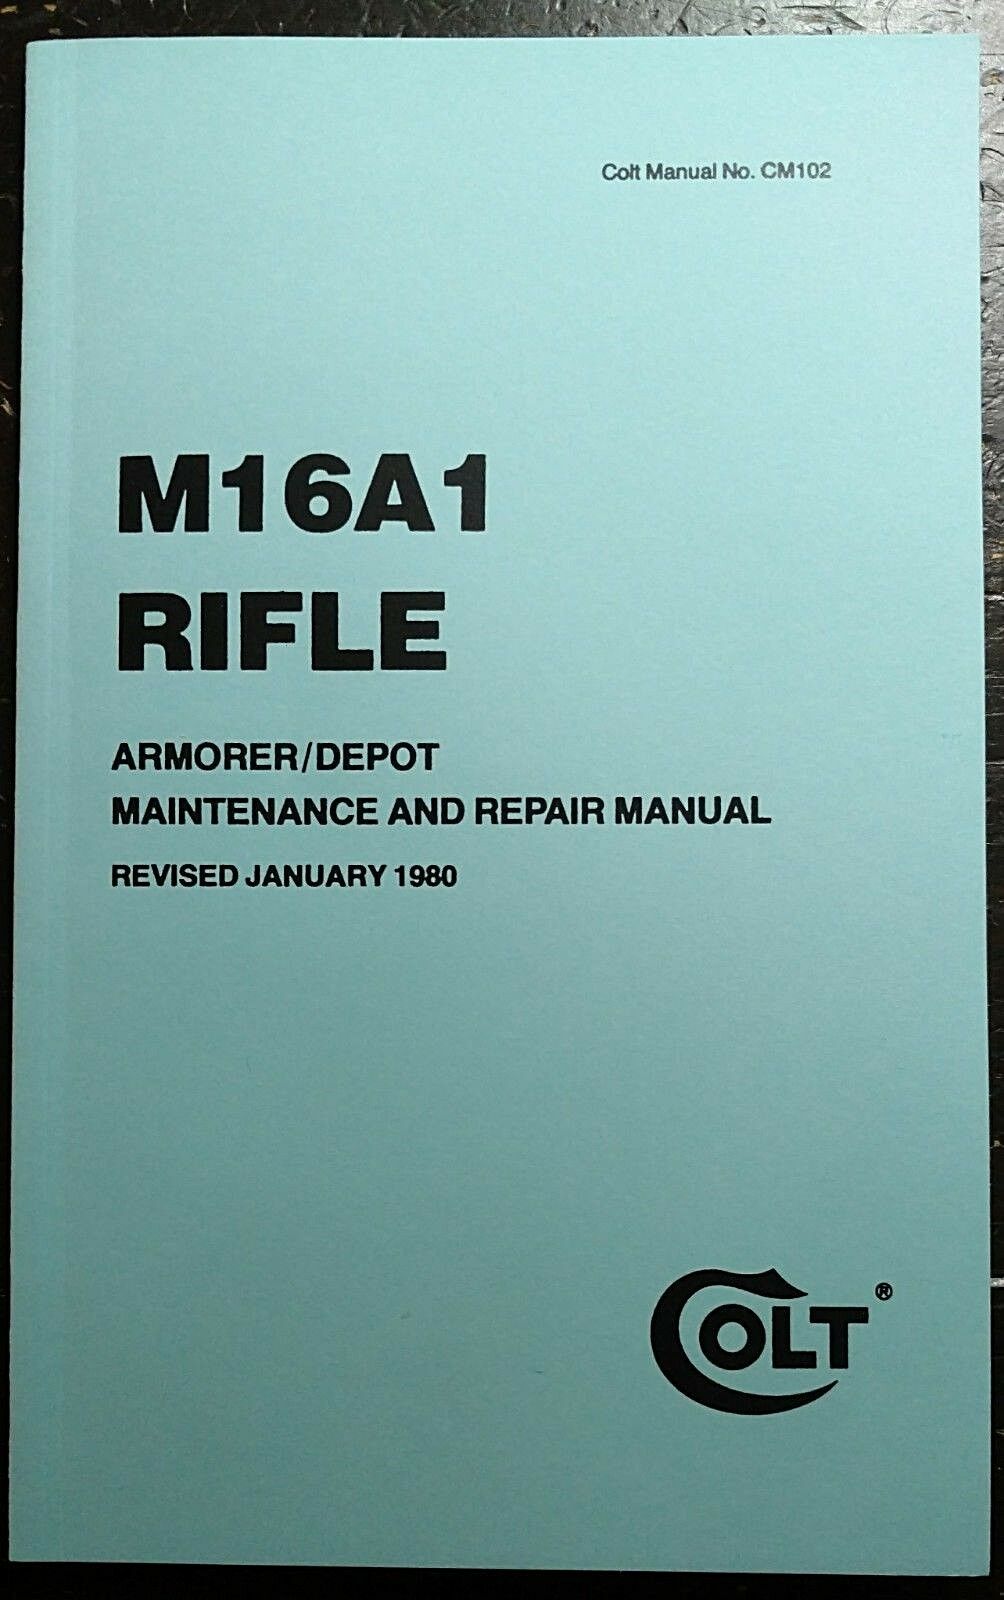 New Manual For Colt M16a1 Rifle - Cm102 Armorer & Depot - Quality Reprint